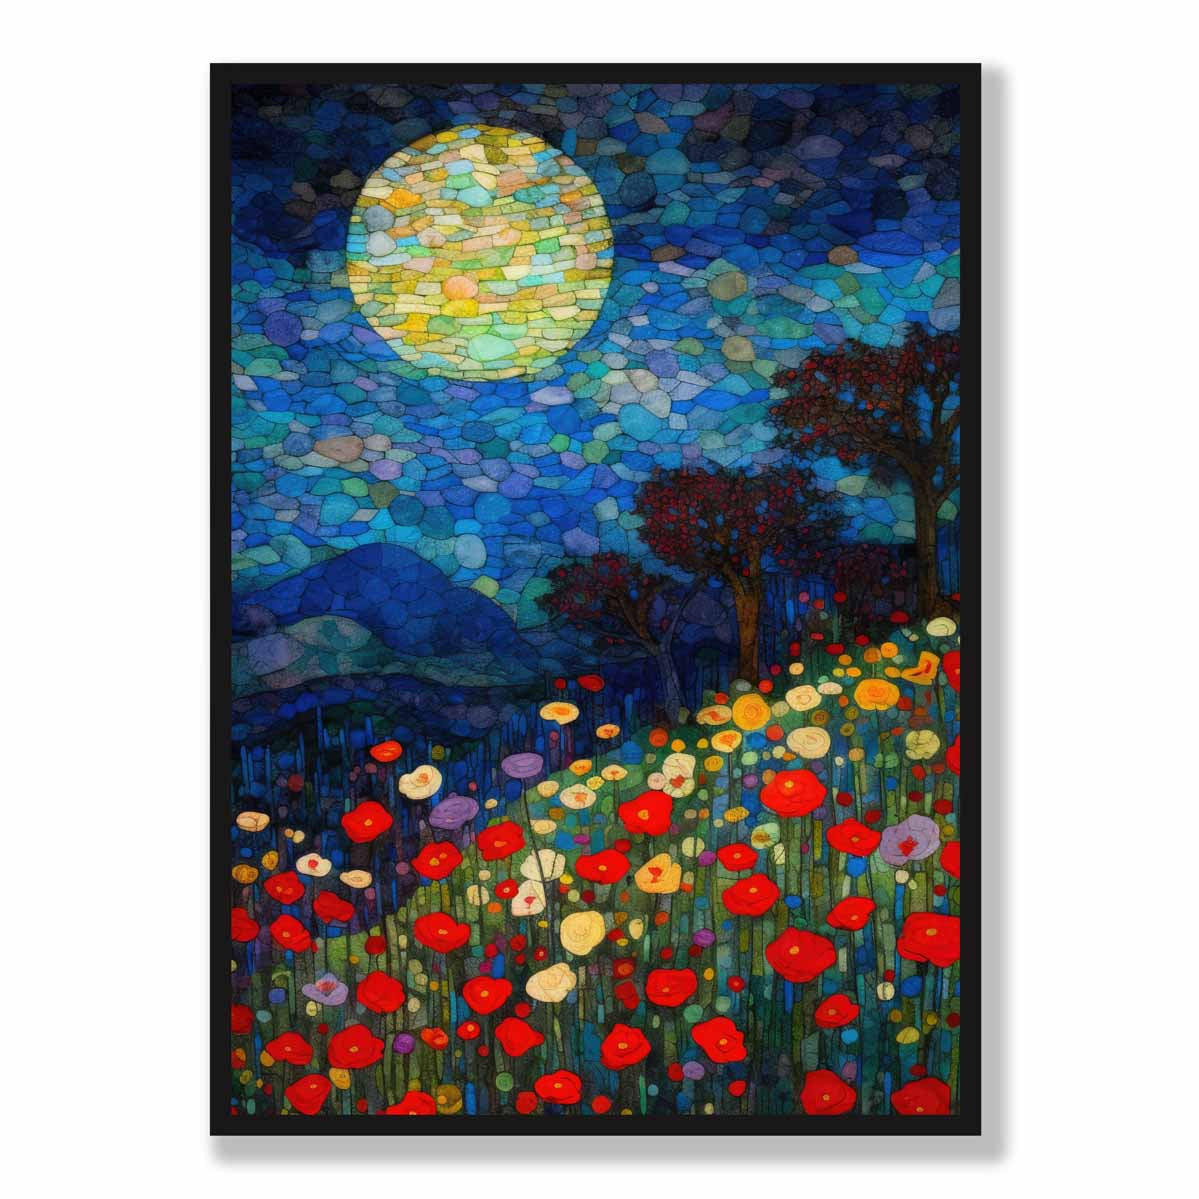 Moonlight Flower Field Abstract Painting Art Print